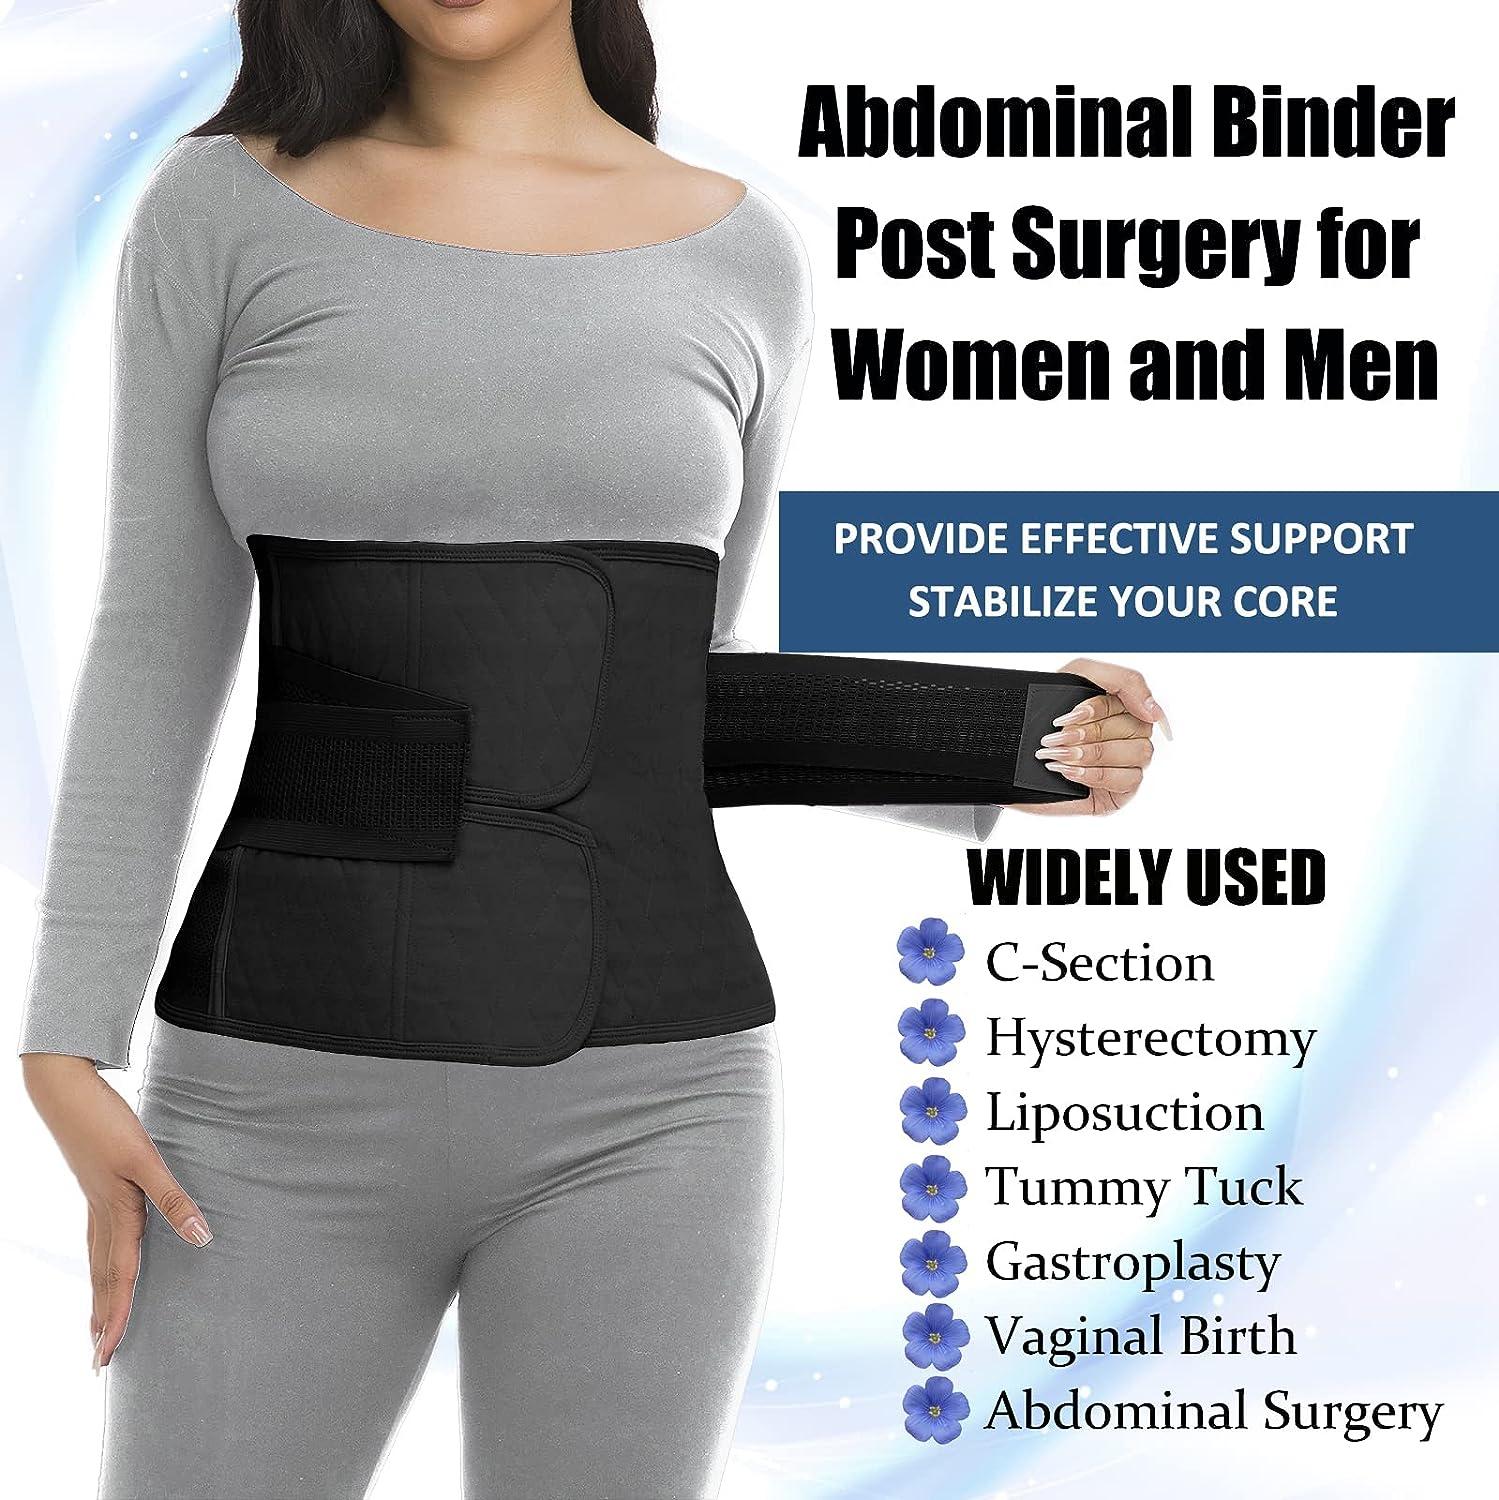 Abdominal Binder for Men  Abdominal Binder After Surgery - The